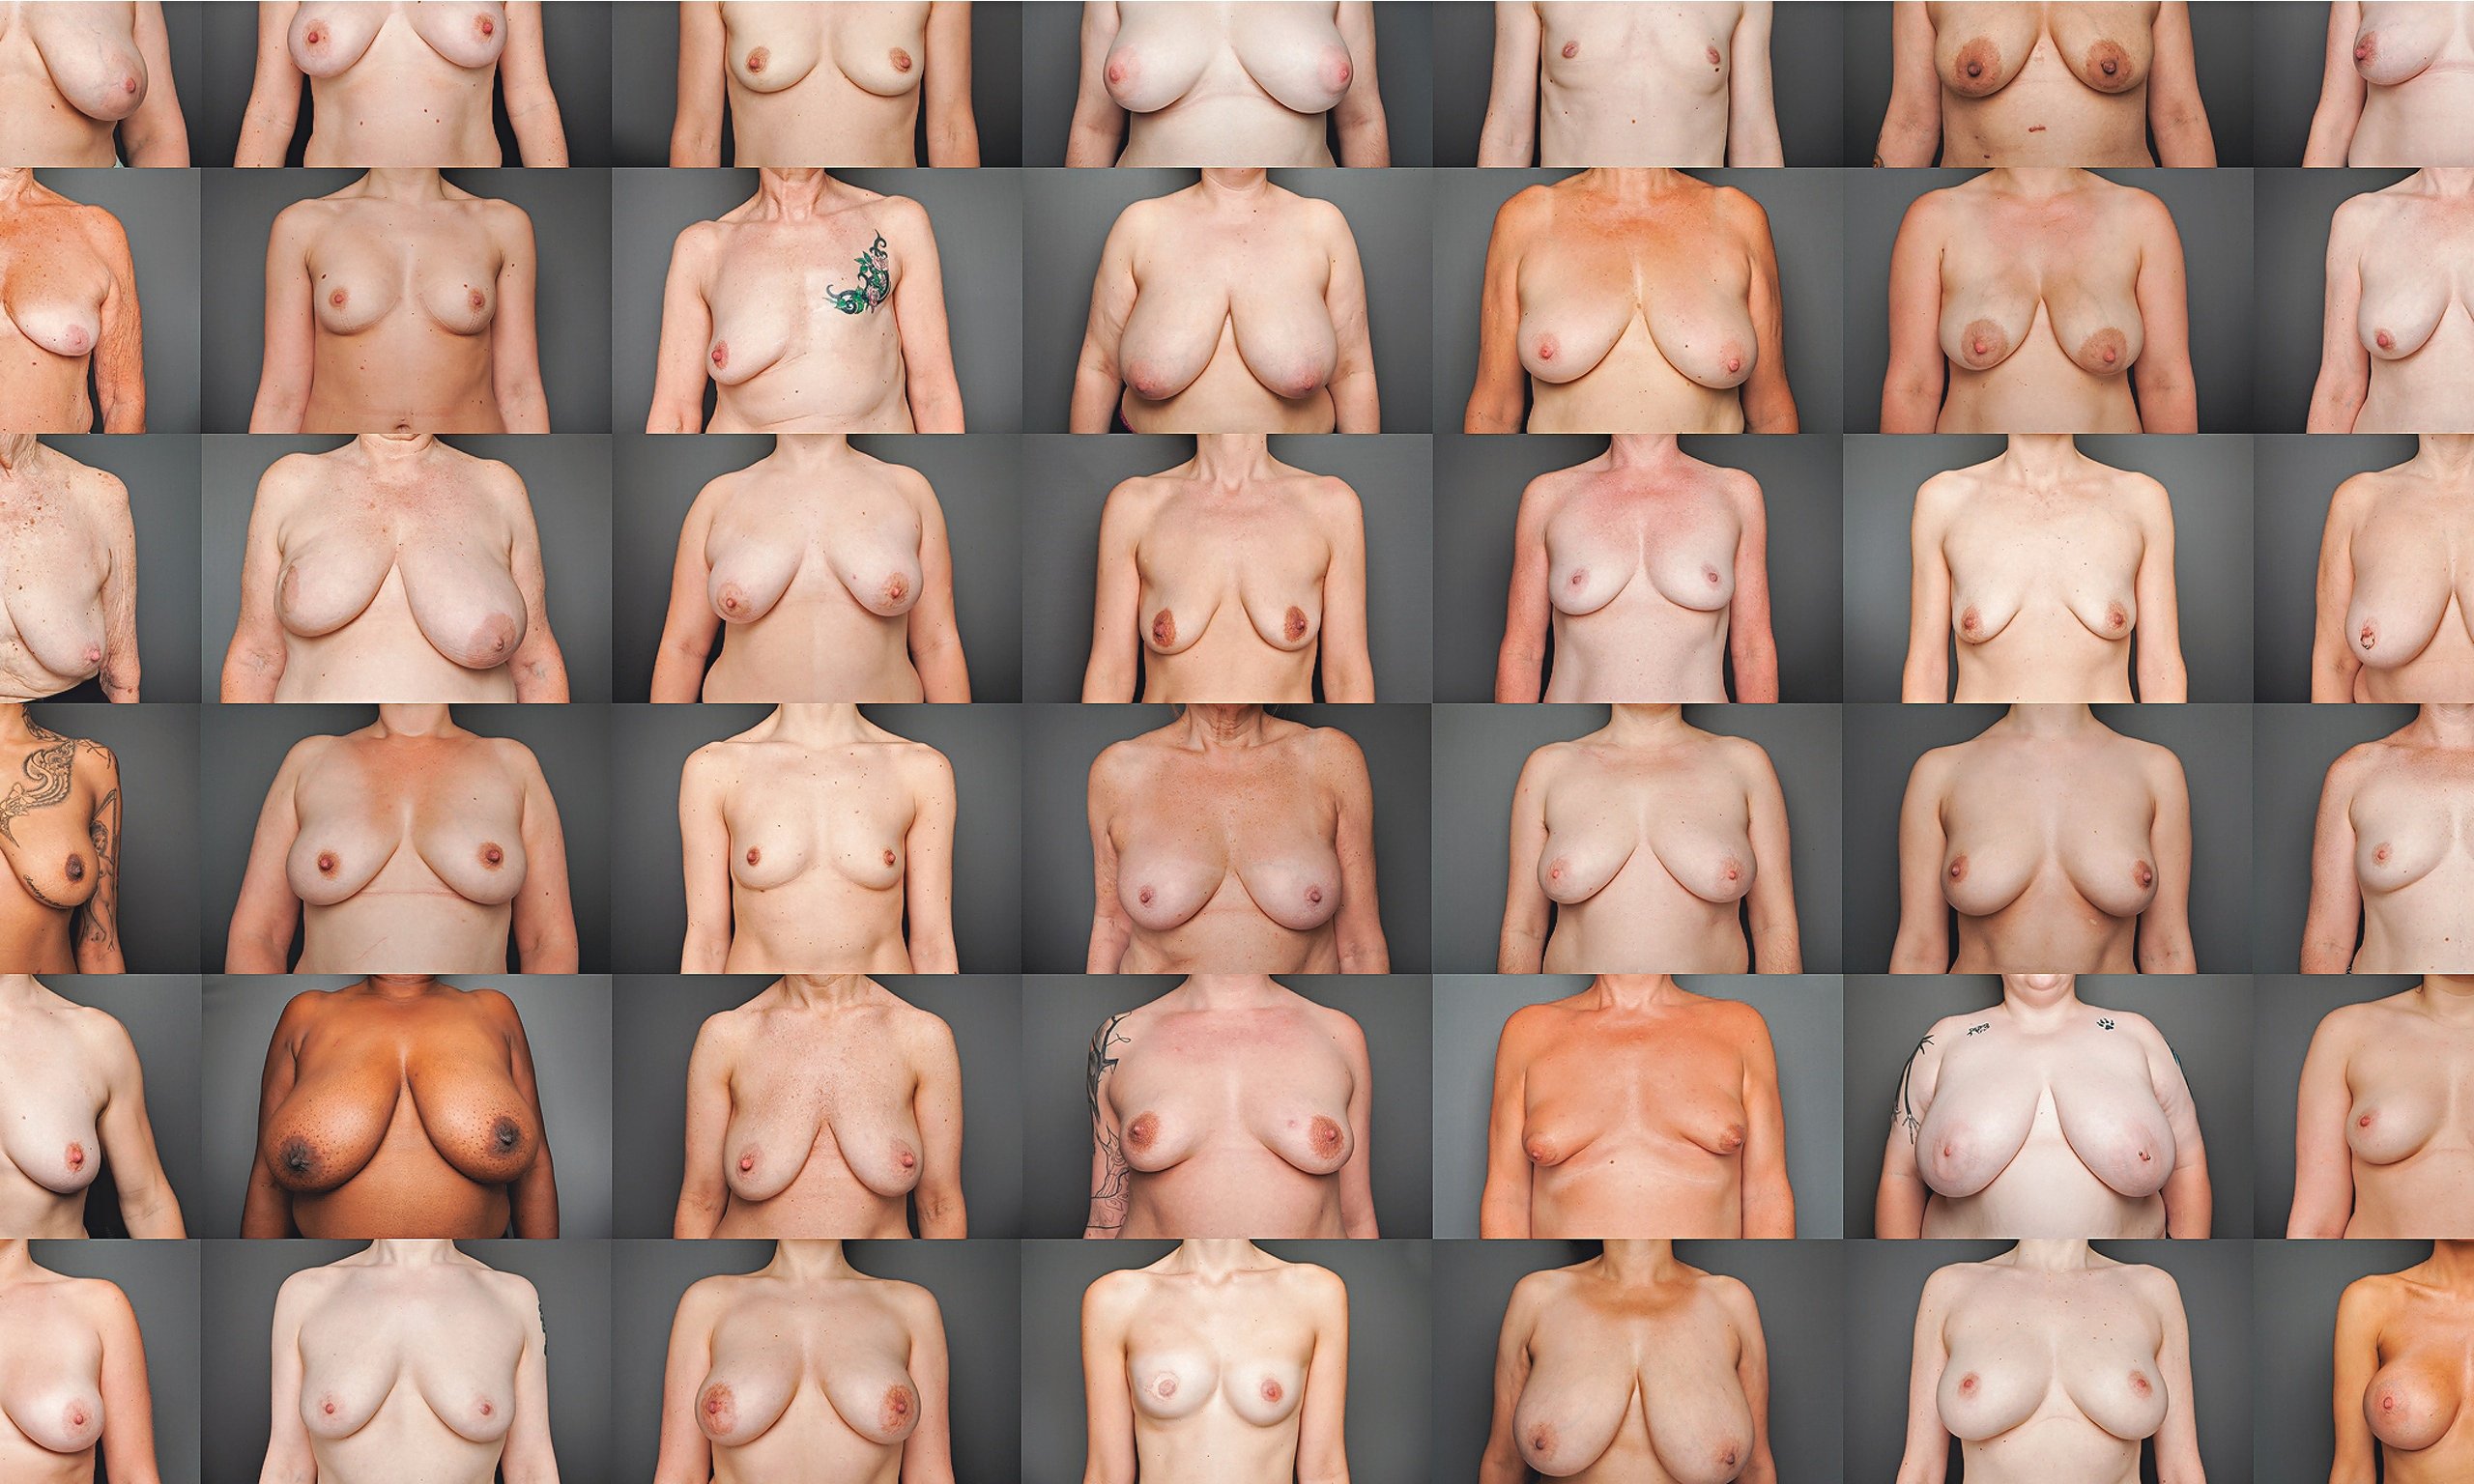 Ugandan girls showing naked breasts best adult free photos